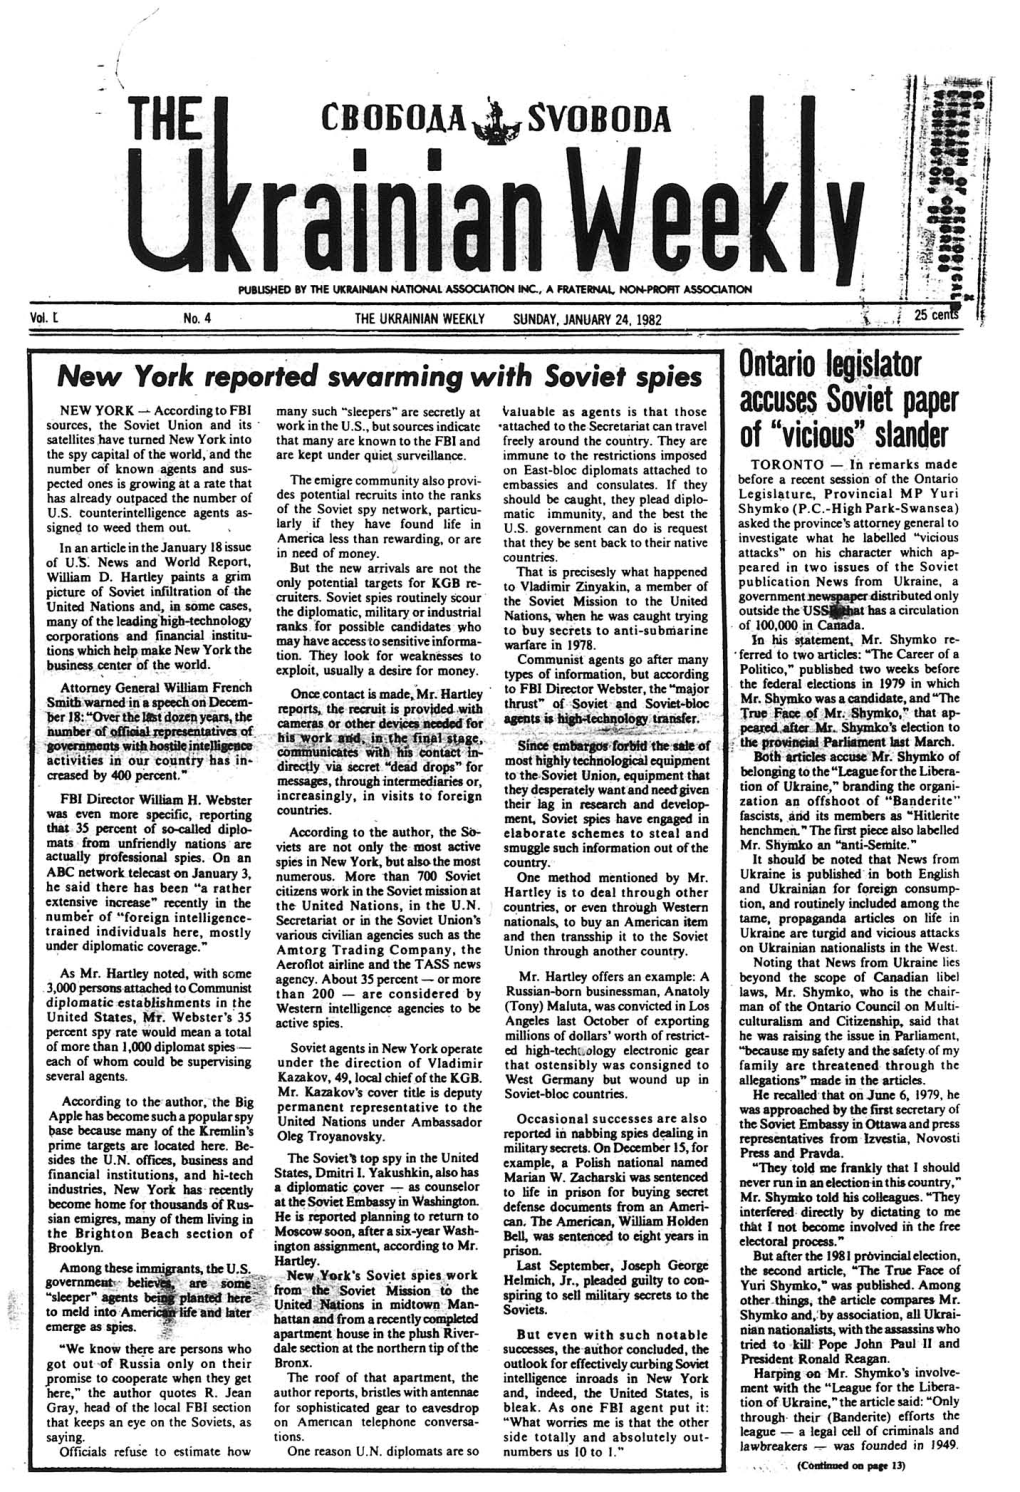 The Ukrainian Weekly 1982, No.4